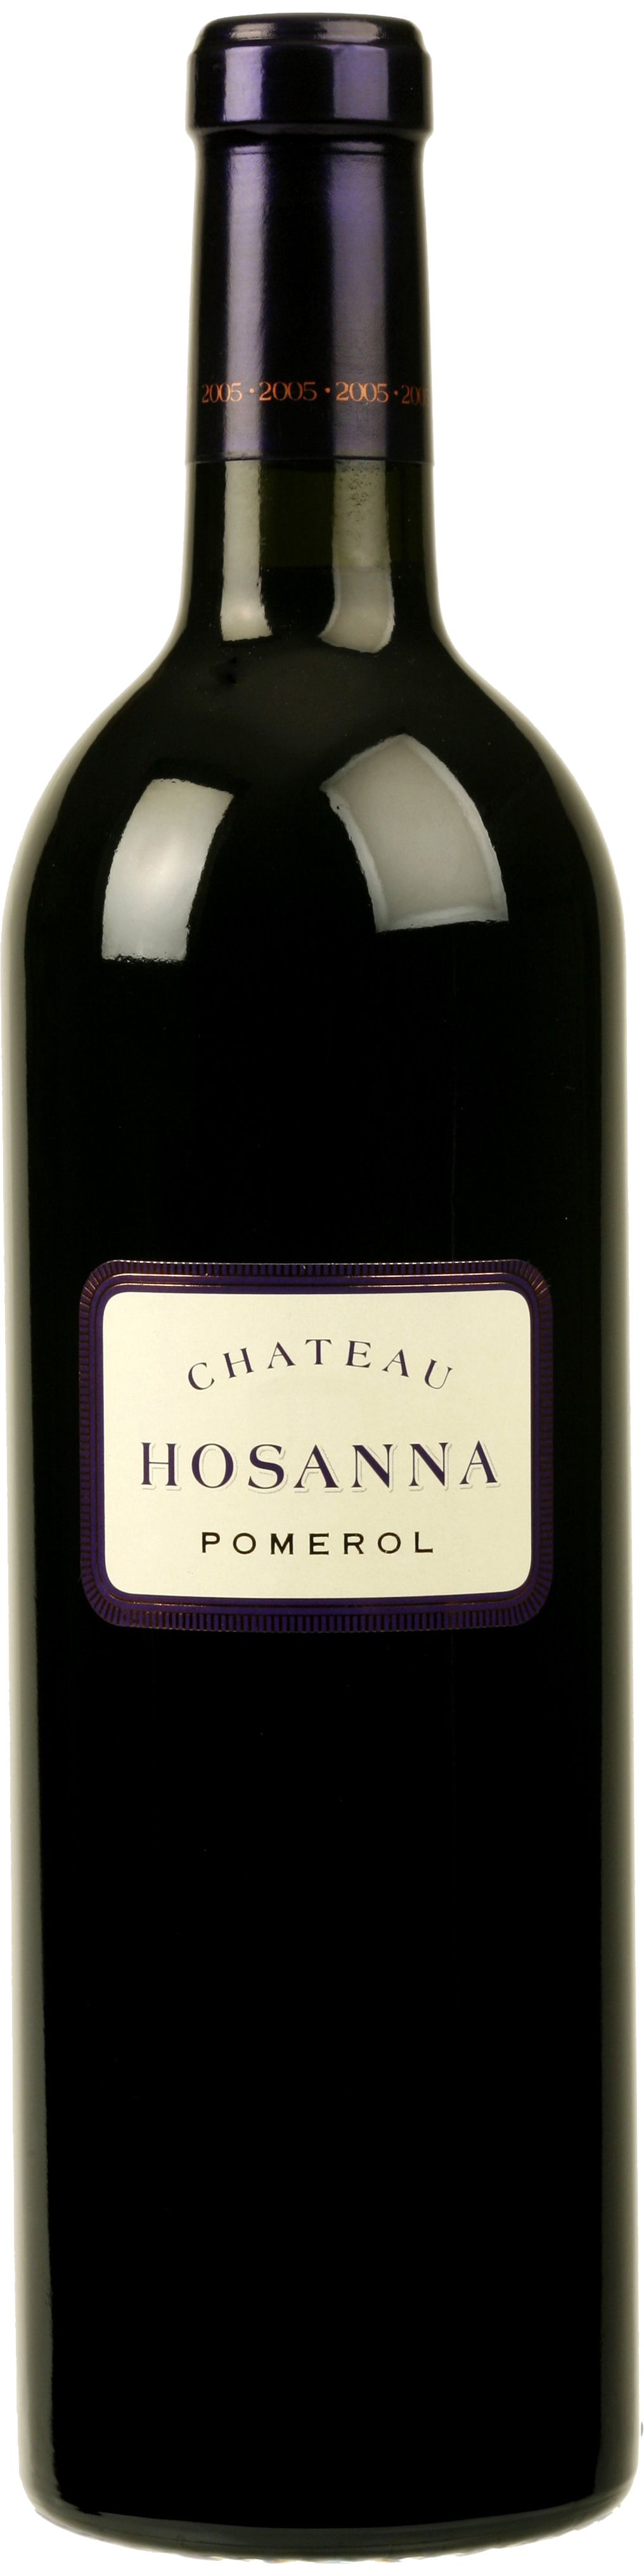 Bottle shot of 2000 Château Hosanna, Pomerol